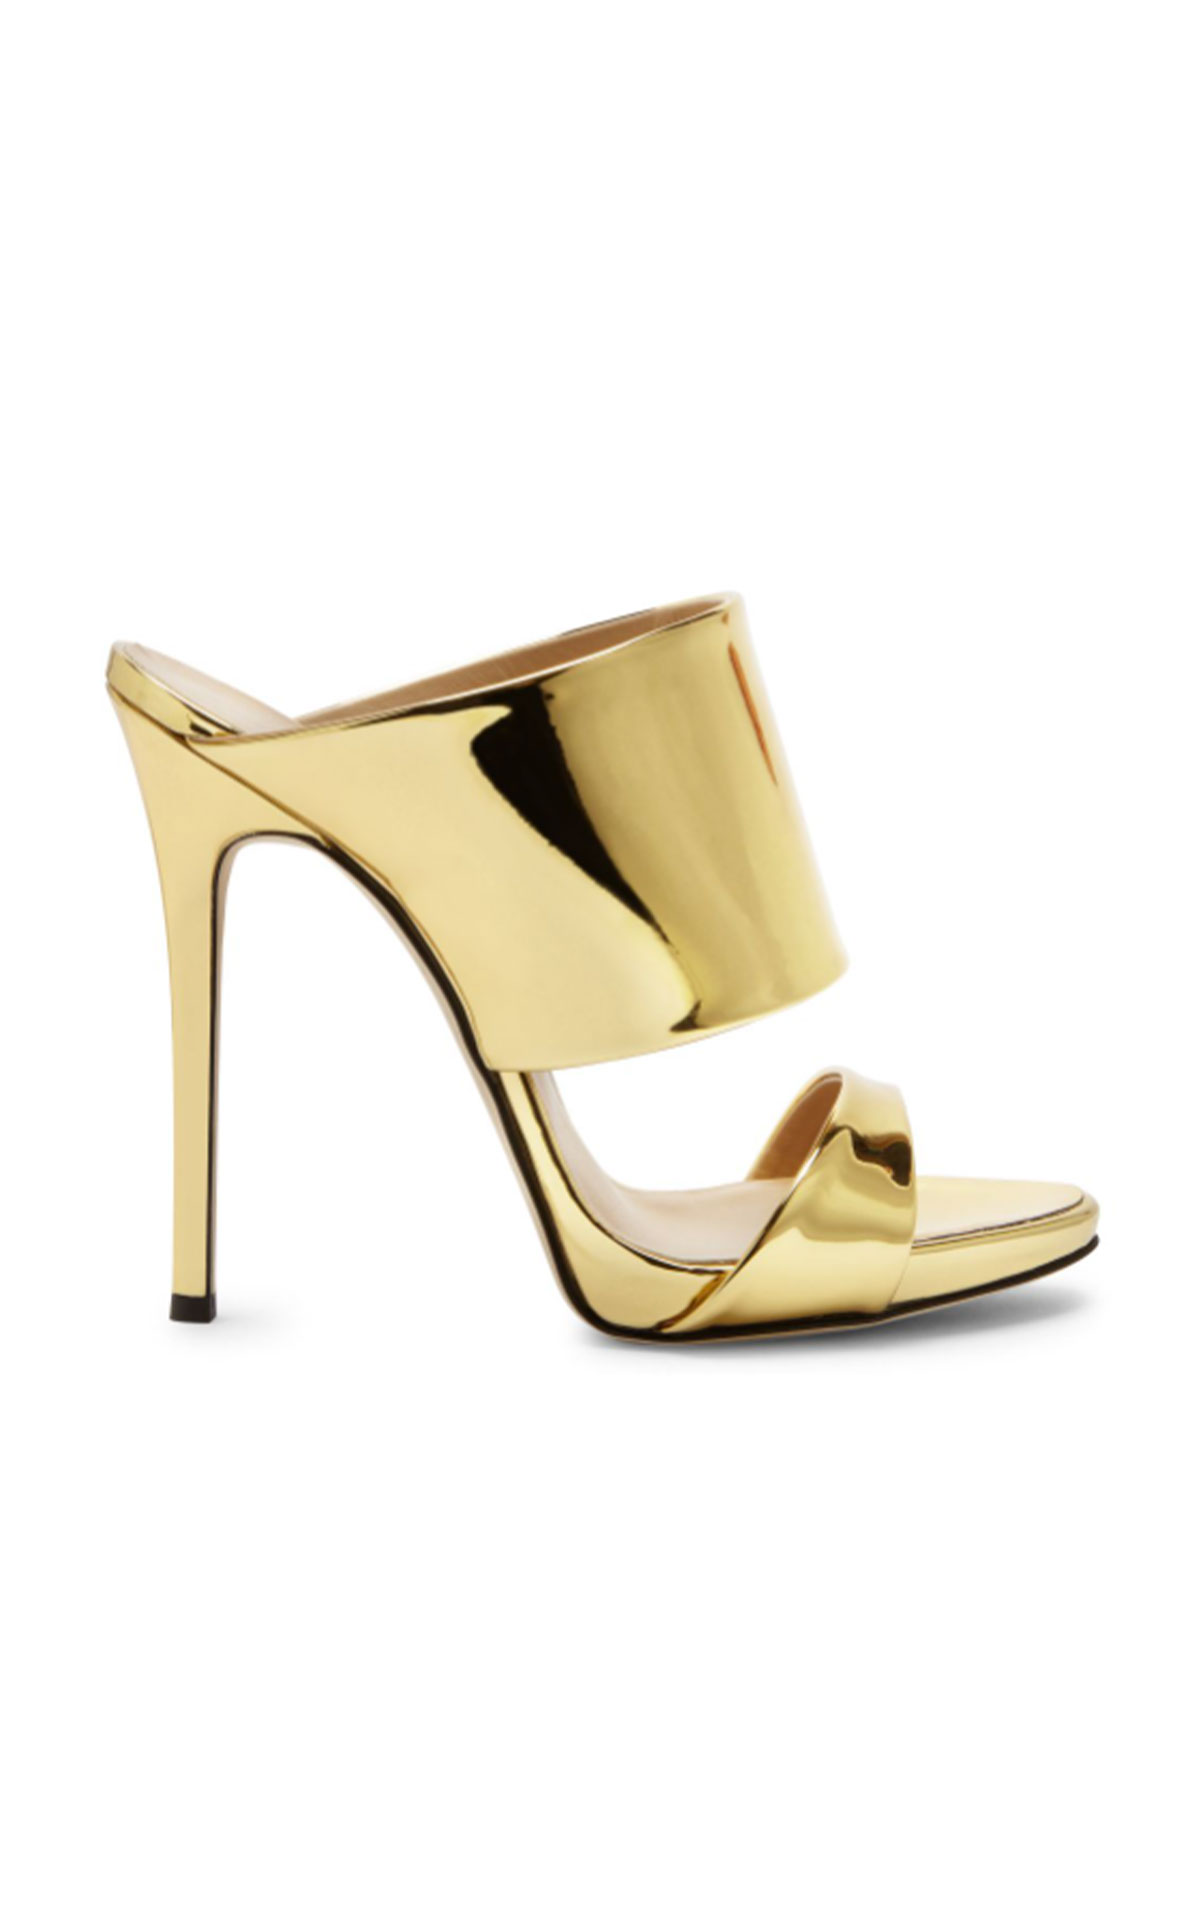 Giuseppe Zanotti Andrea gold heel from Bicester Village